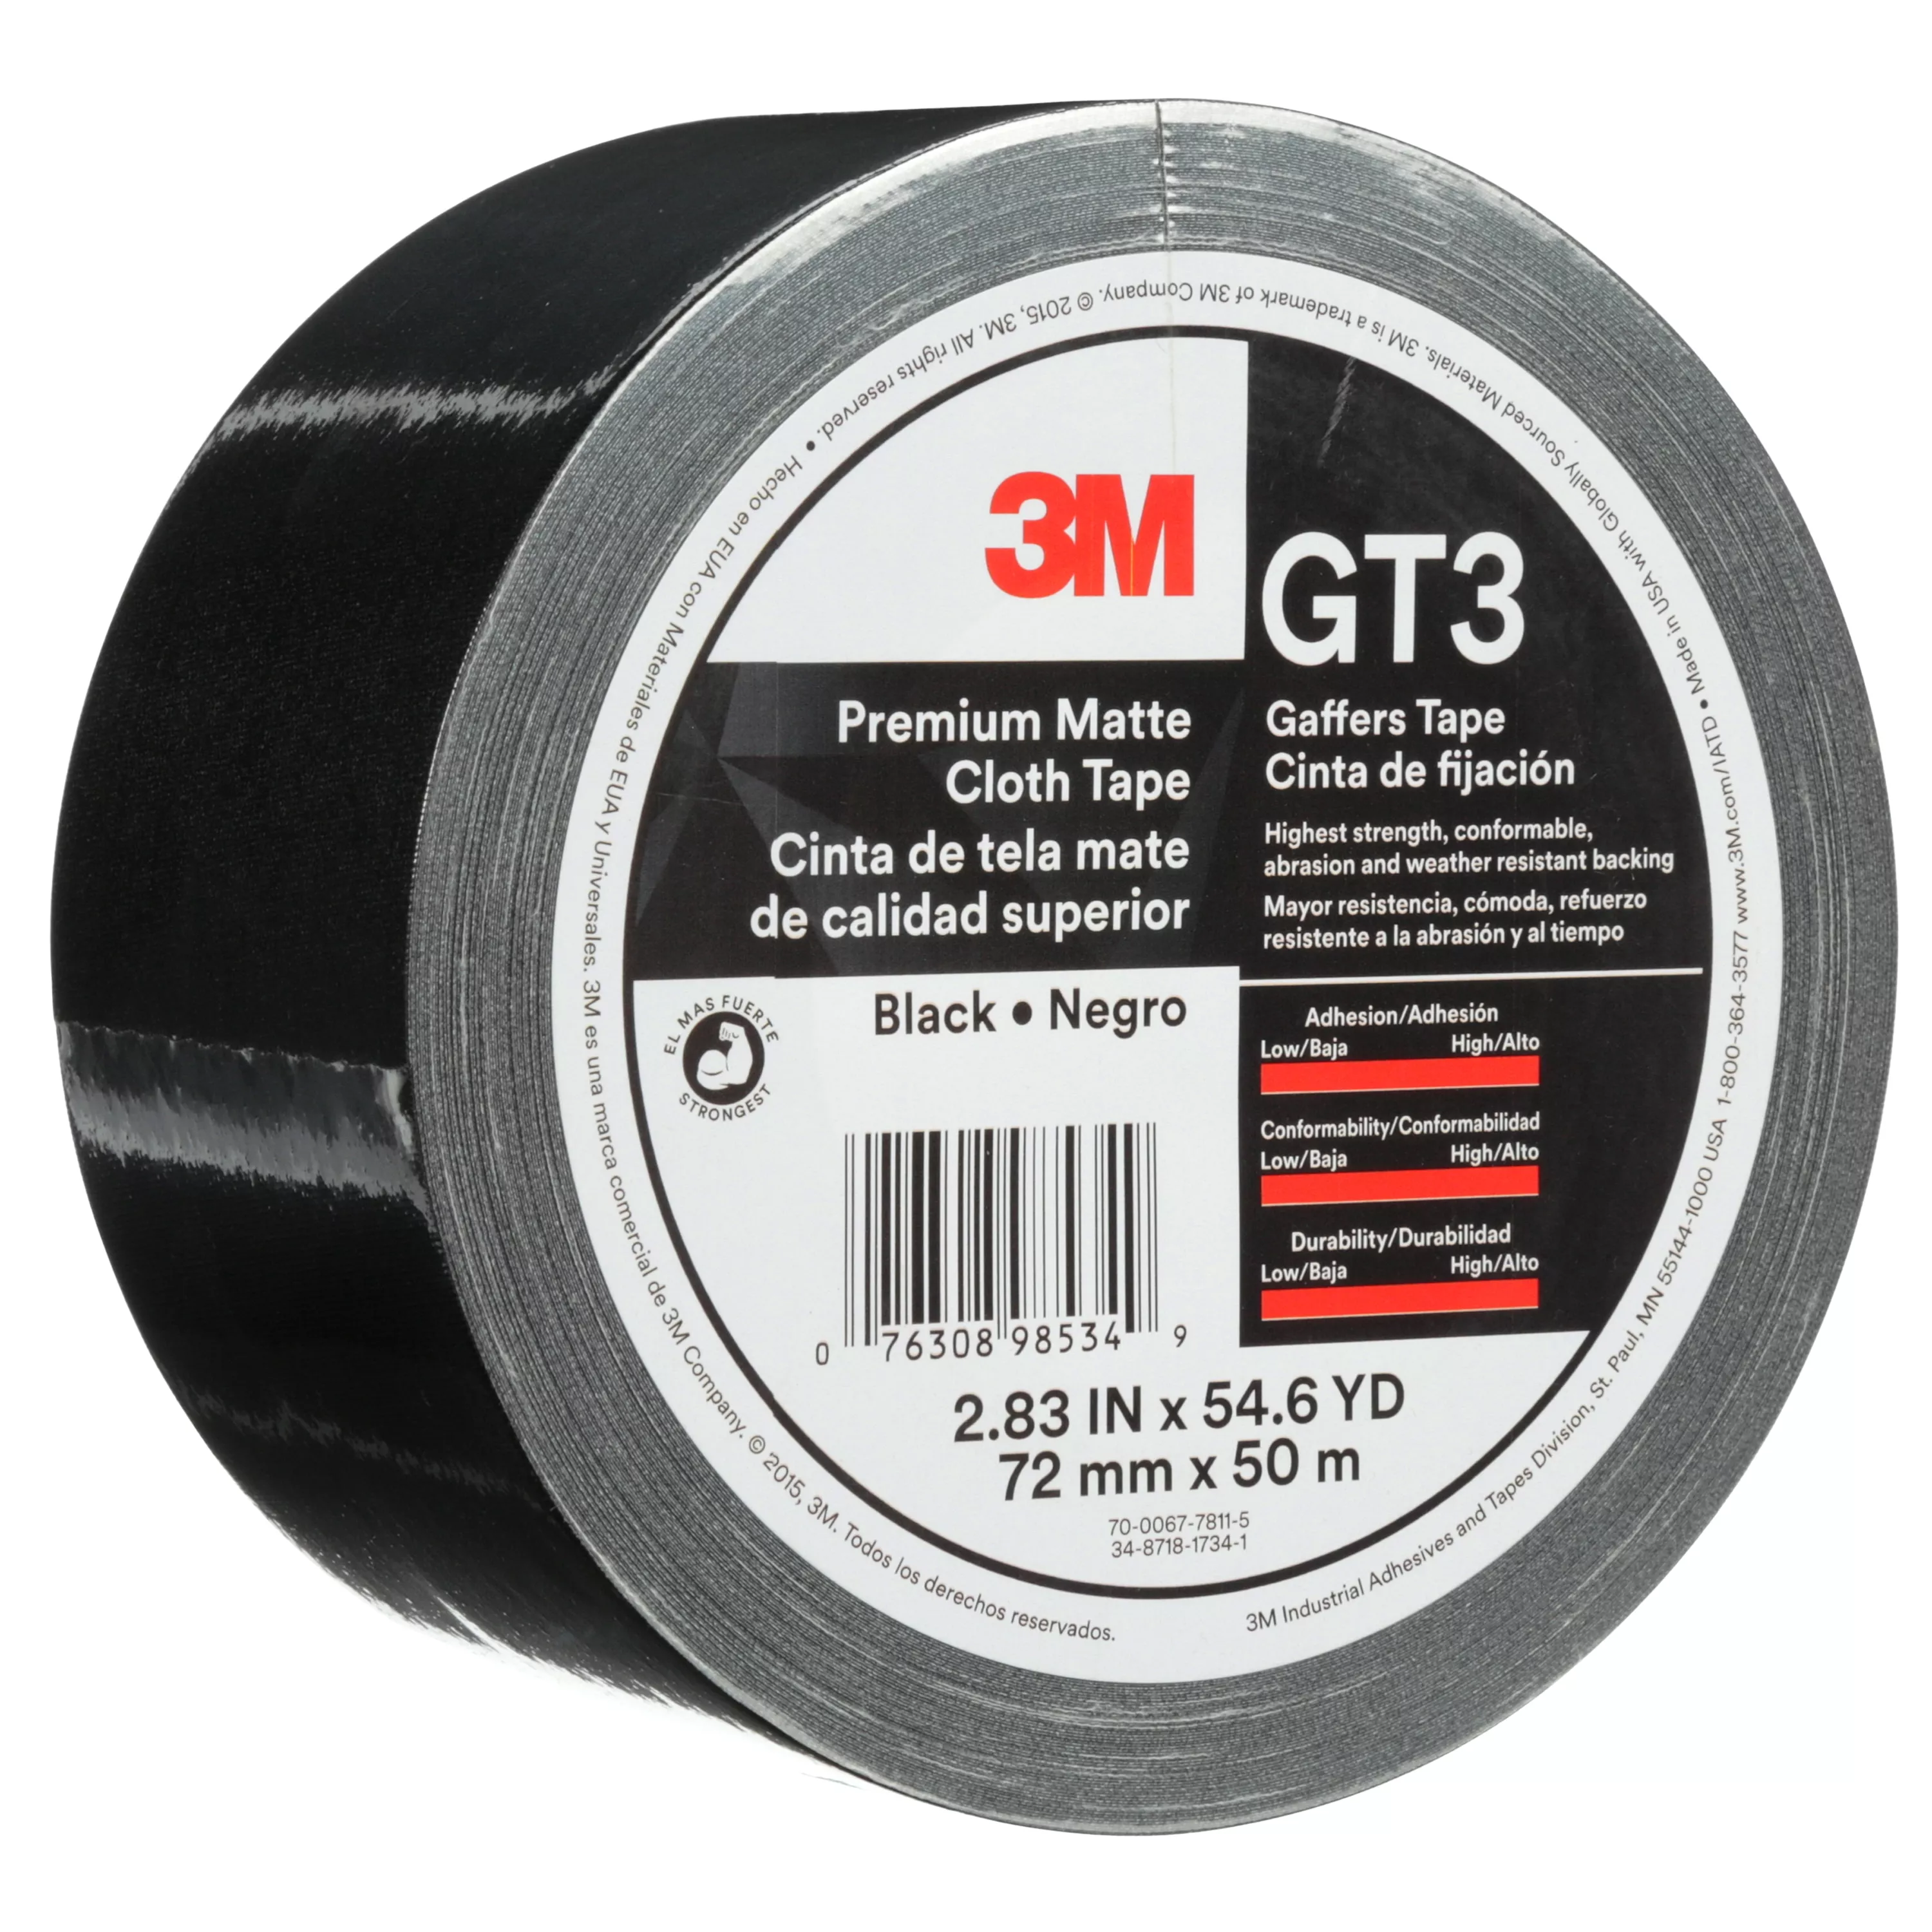 3M™ Premium Matte Cloth (Gaffers) Tape GT3, Black, 72 mm x 50 m, 11 mil,
16/Case